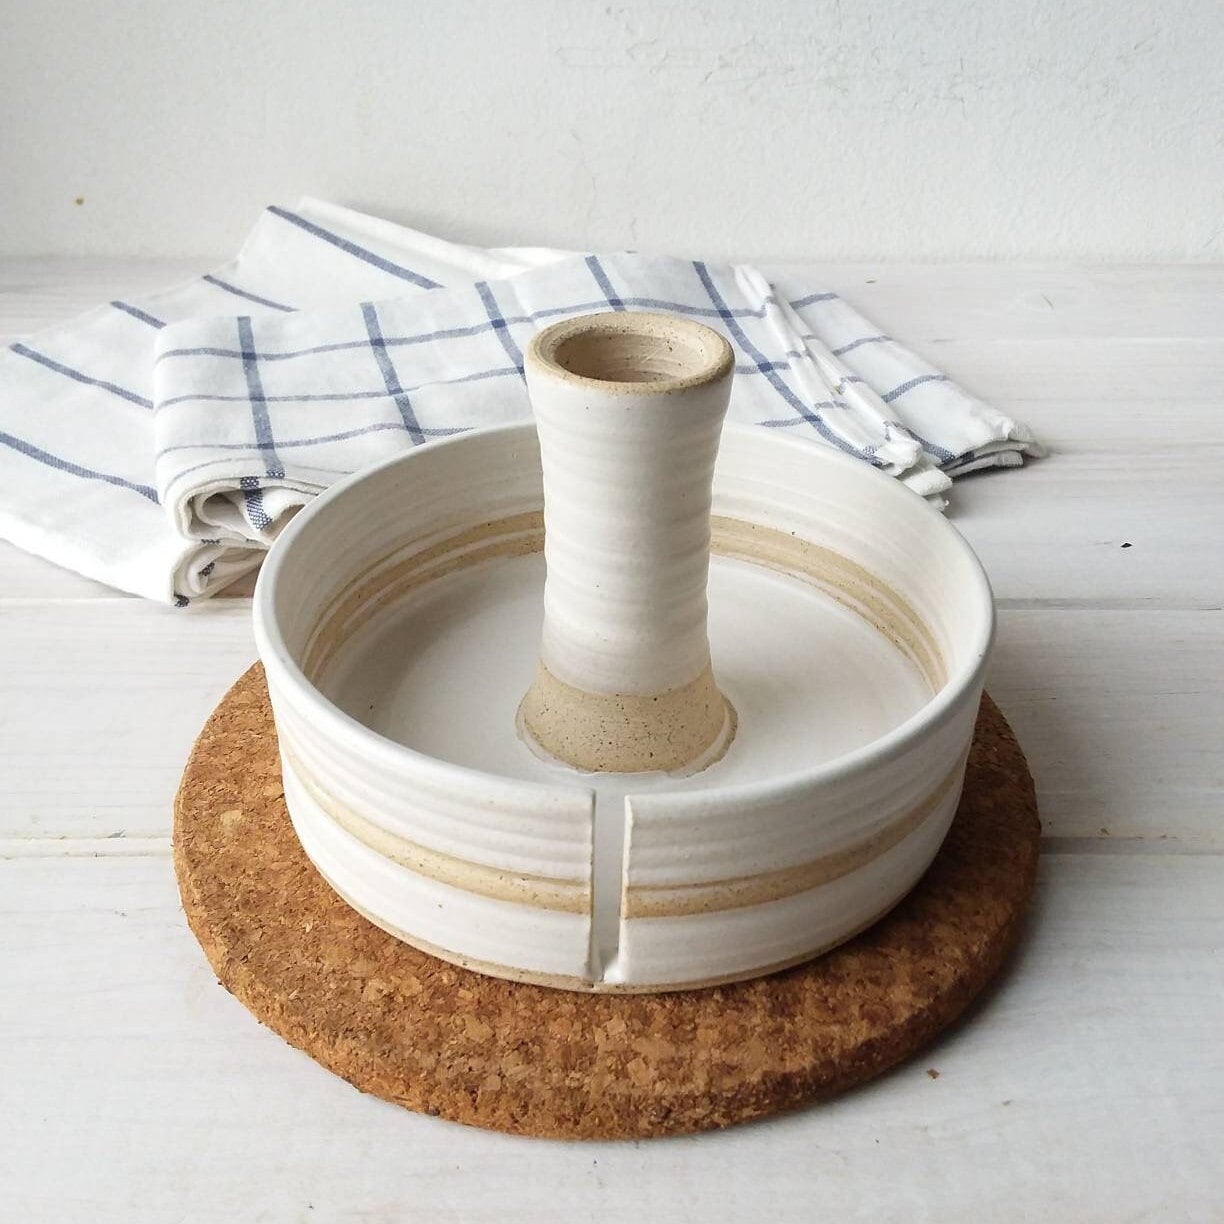 Casafina Ceramic & Wood Paper Towel Holder, White, Made in